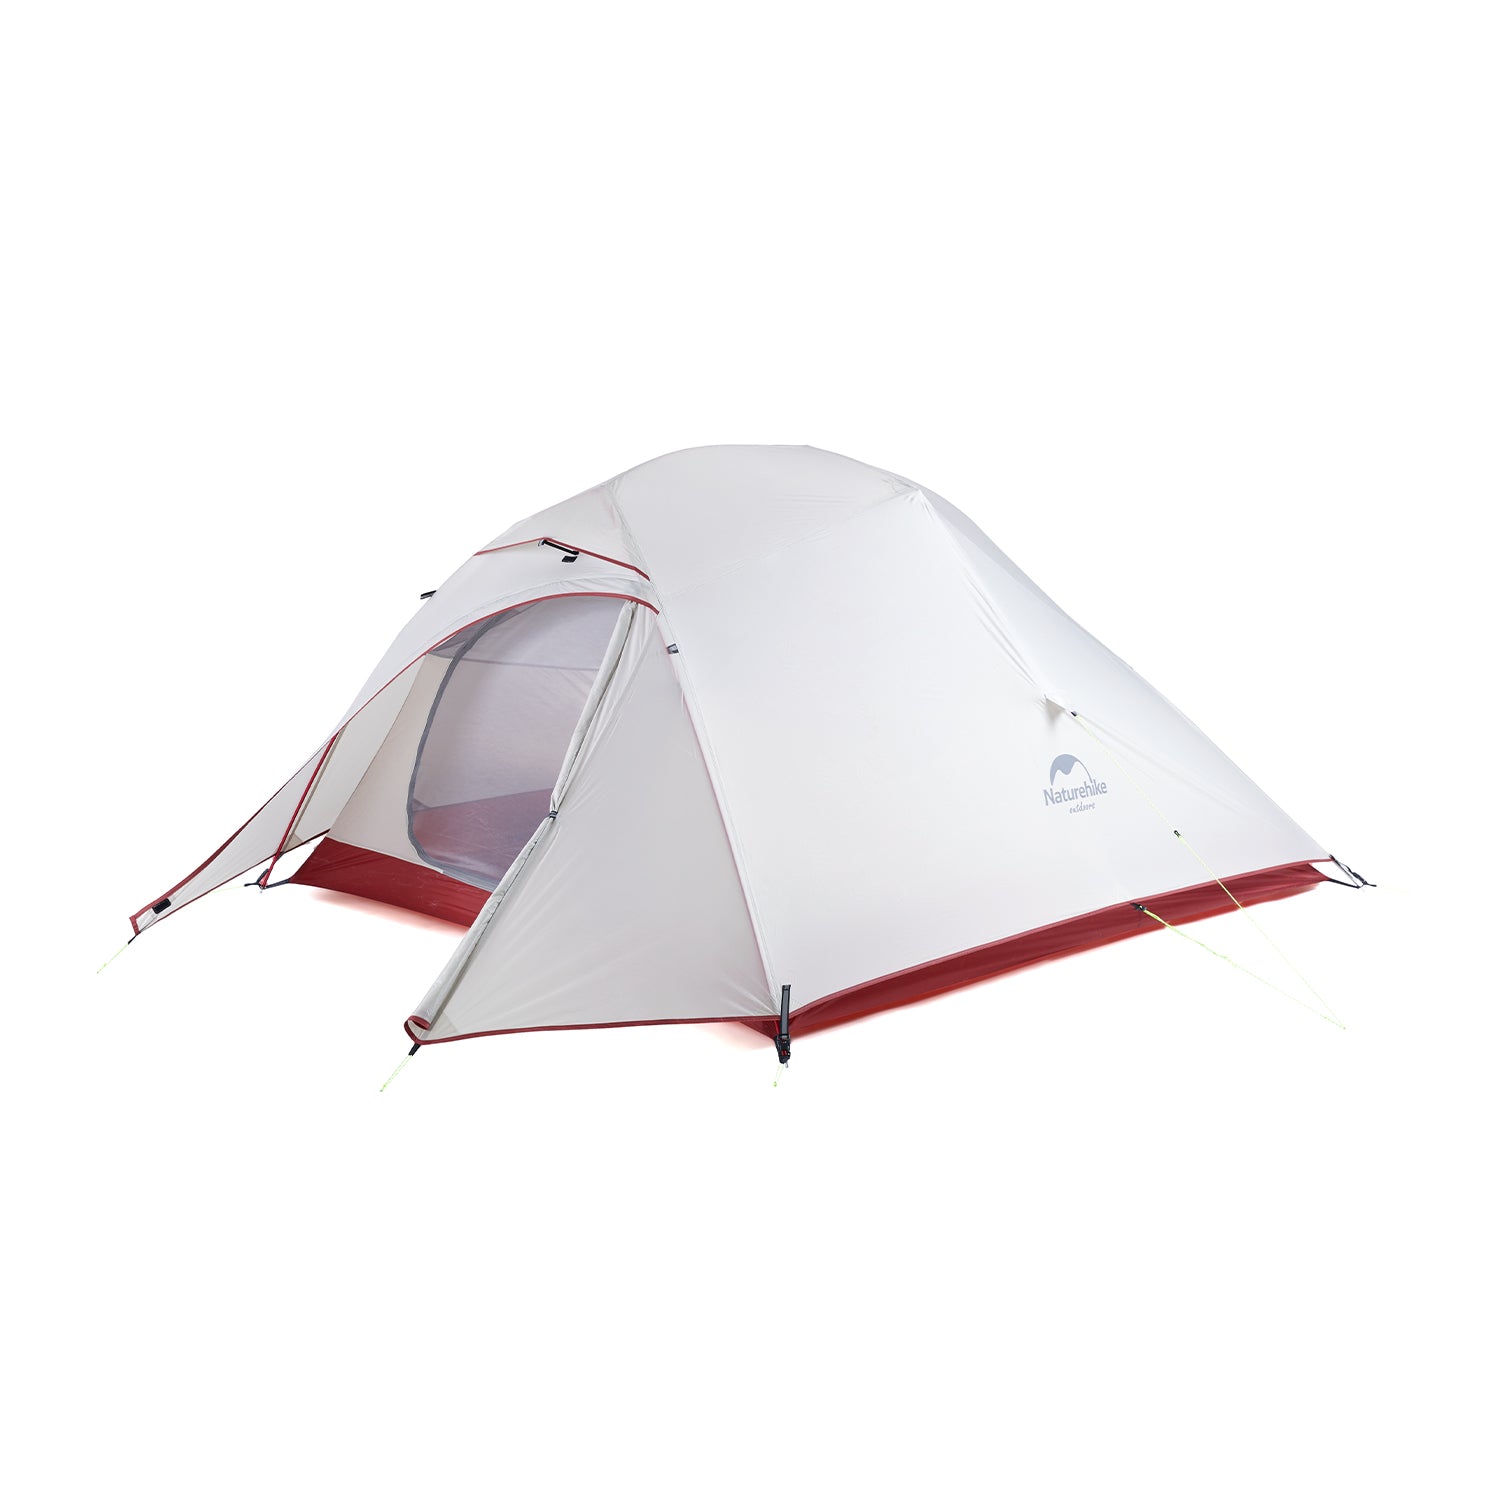 Naturehike テント 3人用 Cloudup3 二重層 超軽量 防風防水 通気性 4シーズン アウトドア 持ち運びやすい キャンピン